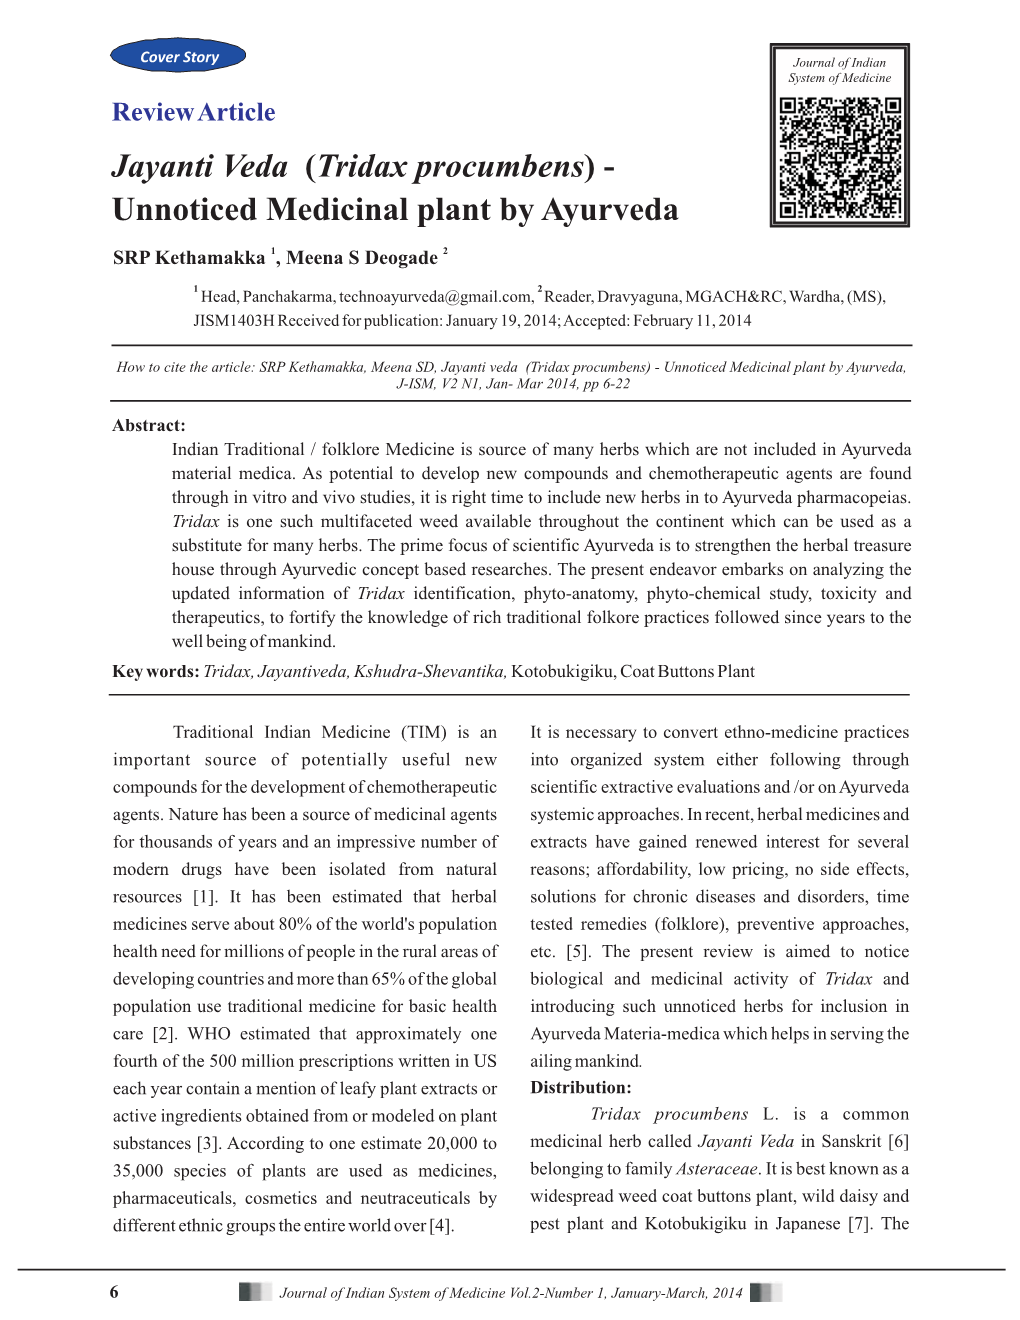 (Tridax Procumbens) - Unnoticed Medicinal Plant by Ayurveda, J-ISM, V2 N1, Jan- Mar 2014, Pp 6-22